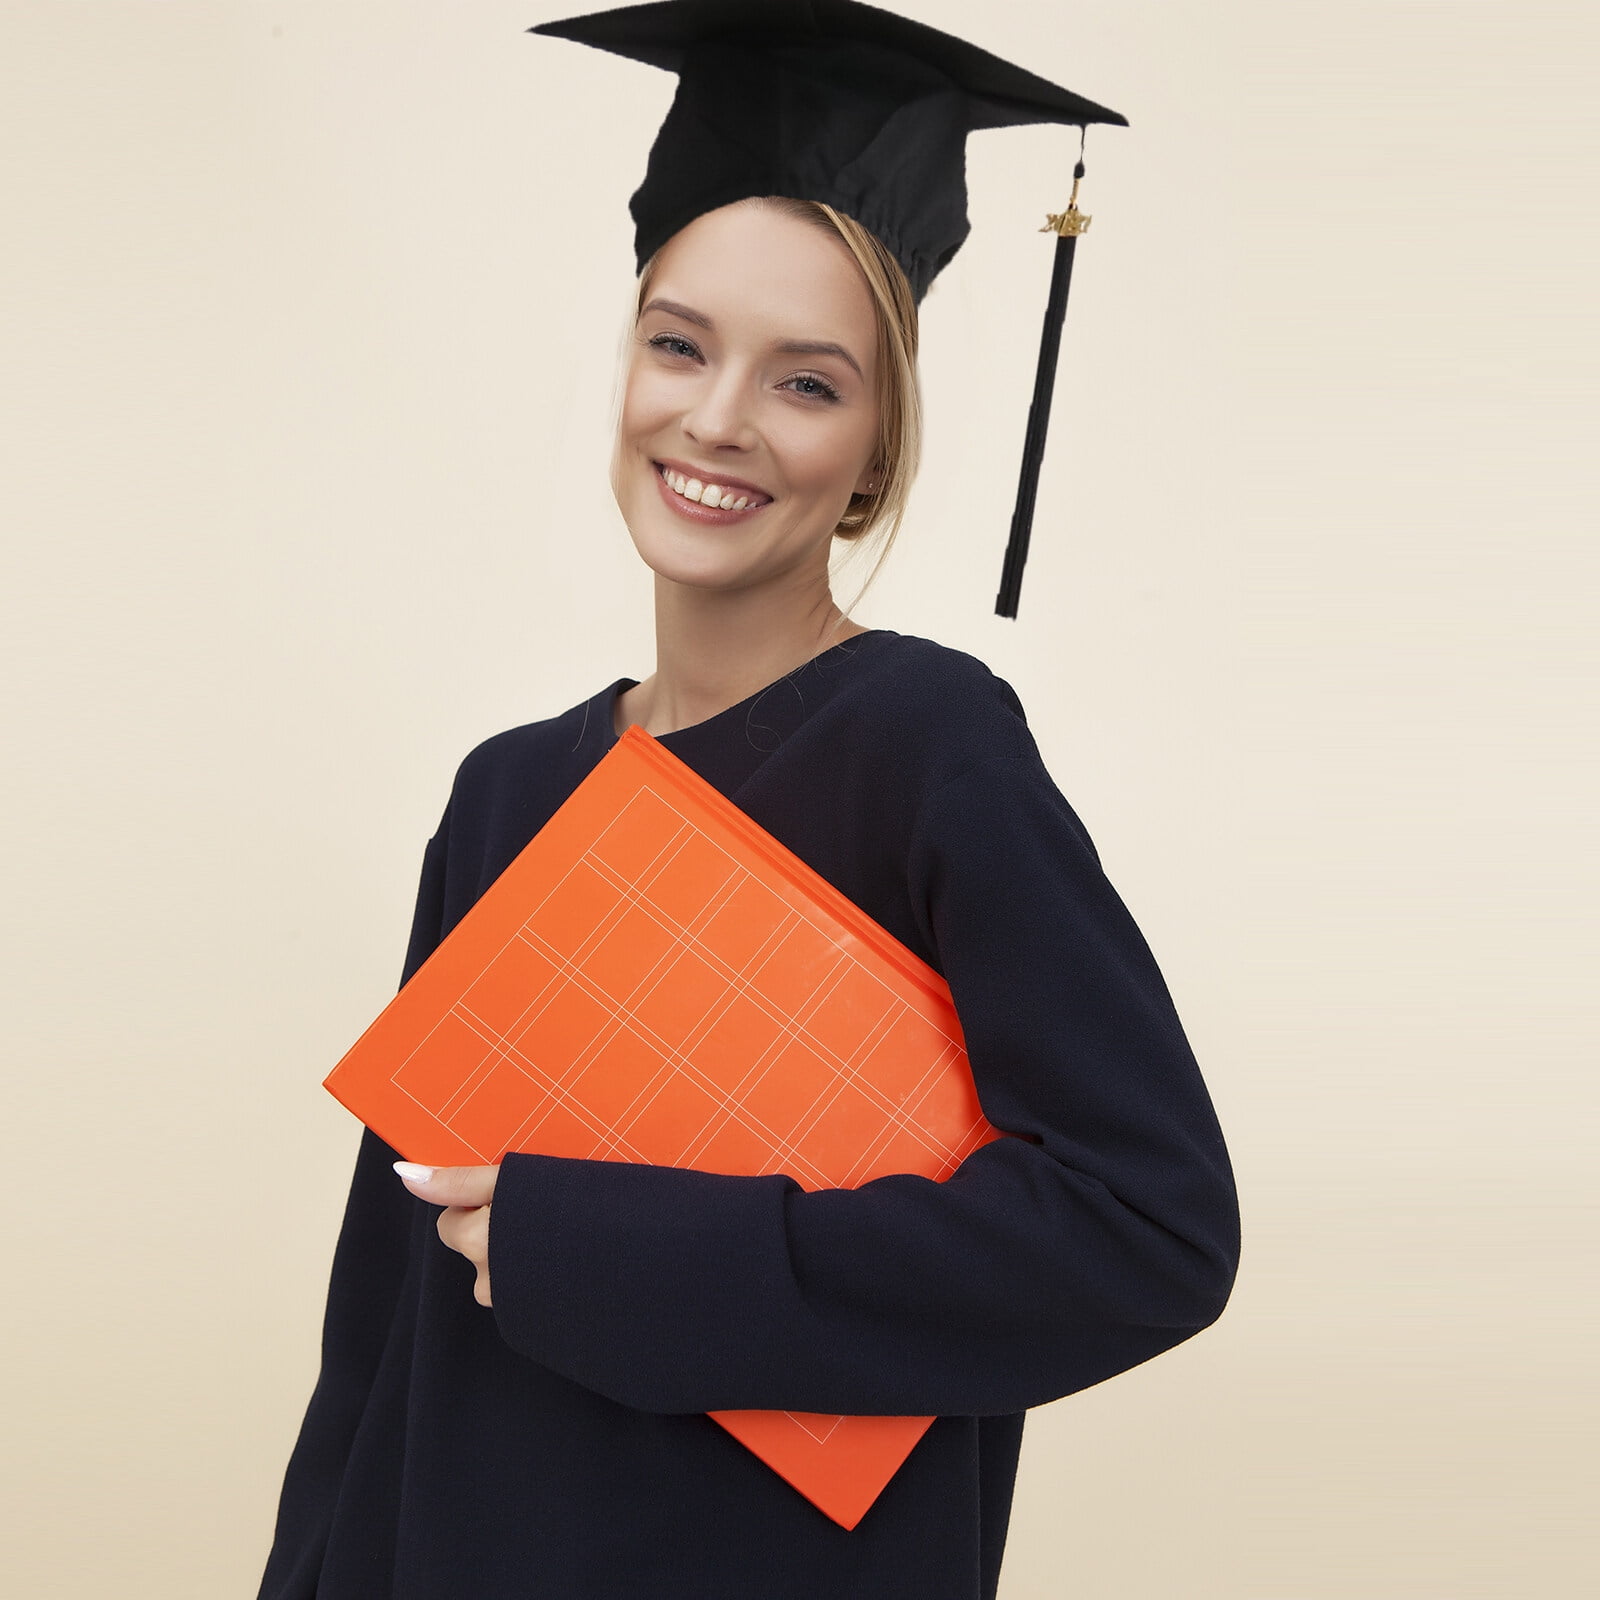 Matte Black University Graduation Gown and| Alibaba.com